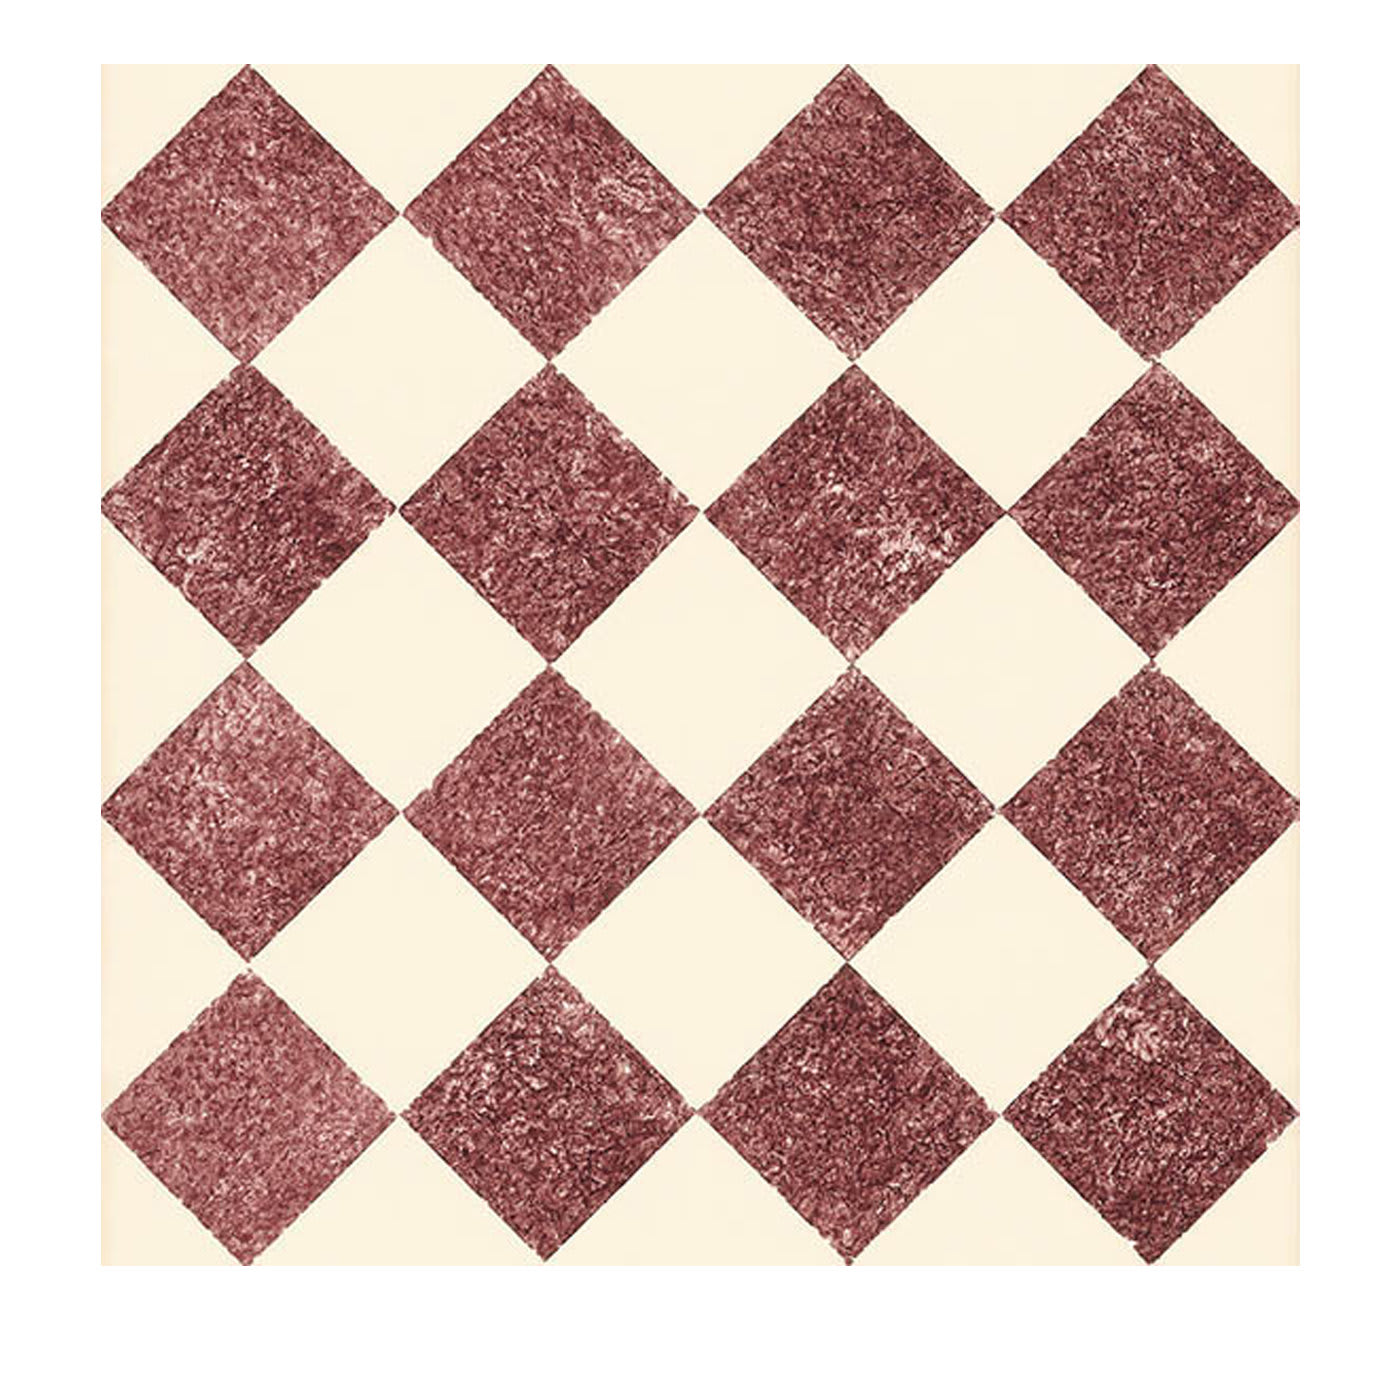 Set of 30 Red Queen Tiles - Ceramica Bardelli